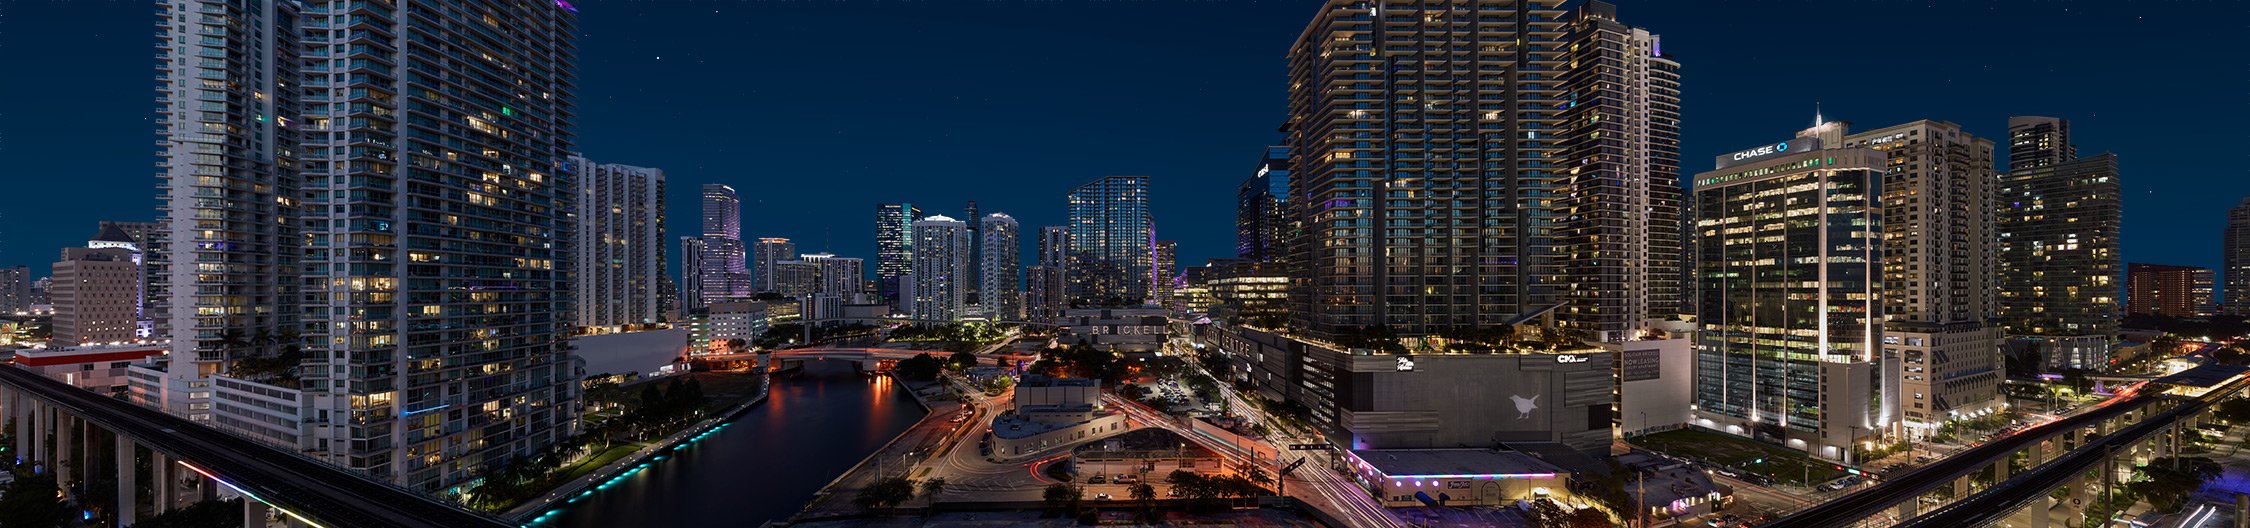 Miami-Night.jpg